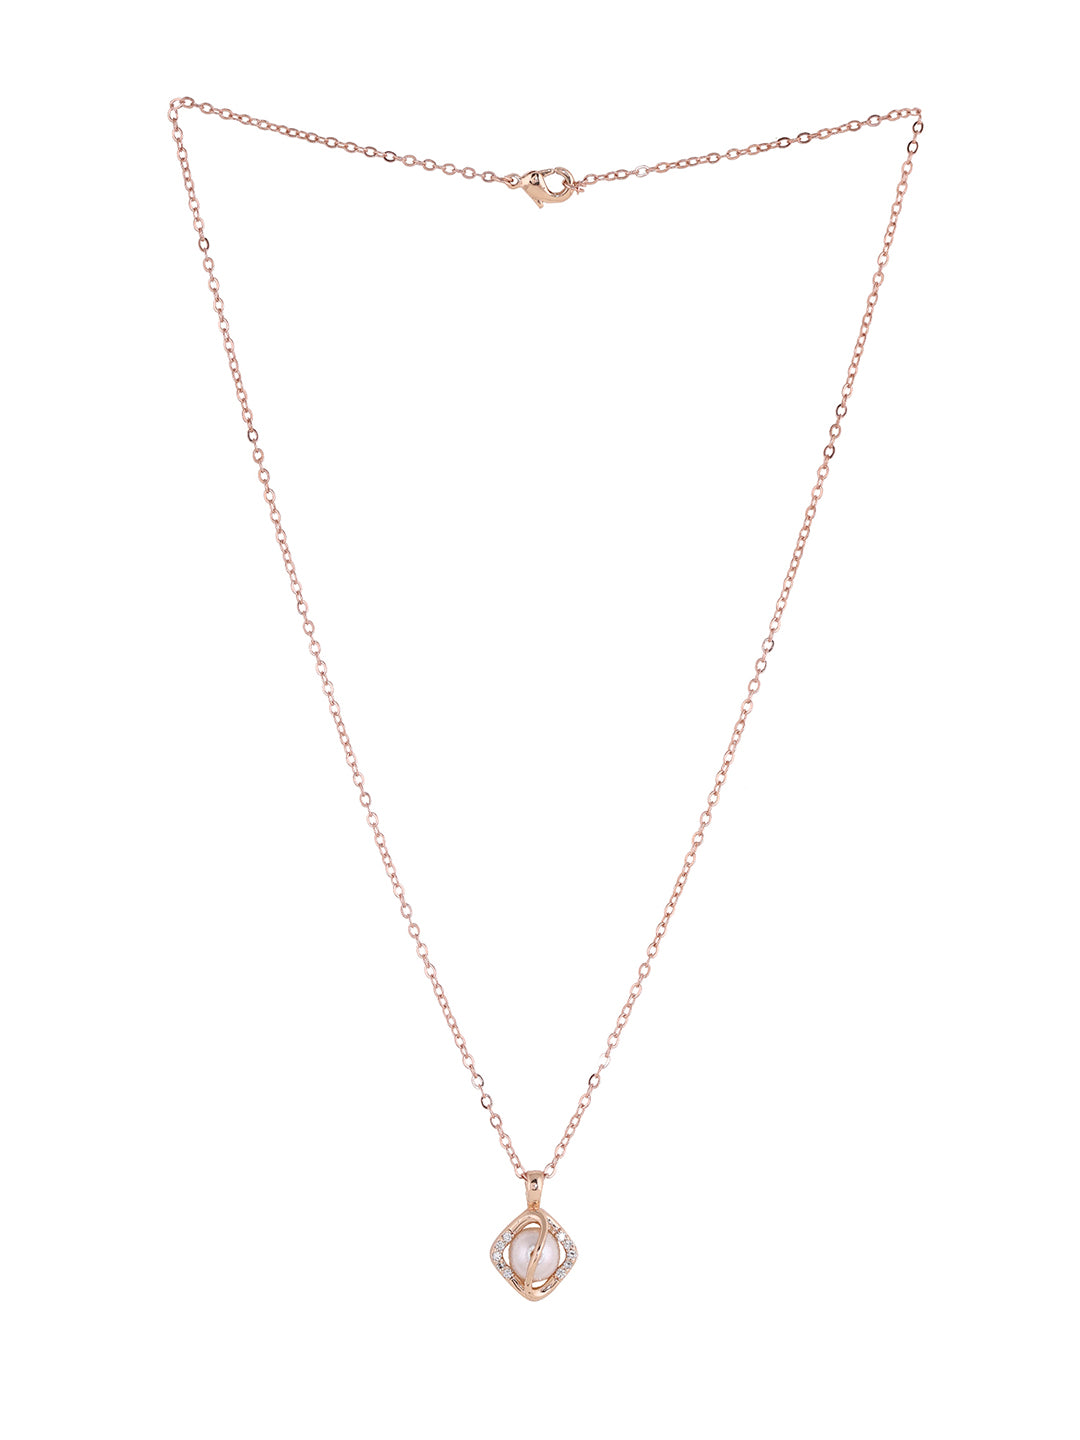 Prita Dazzling Love Lock American Diamond Necklace